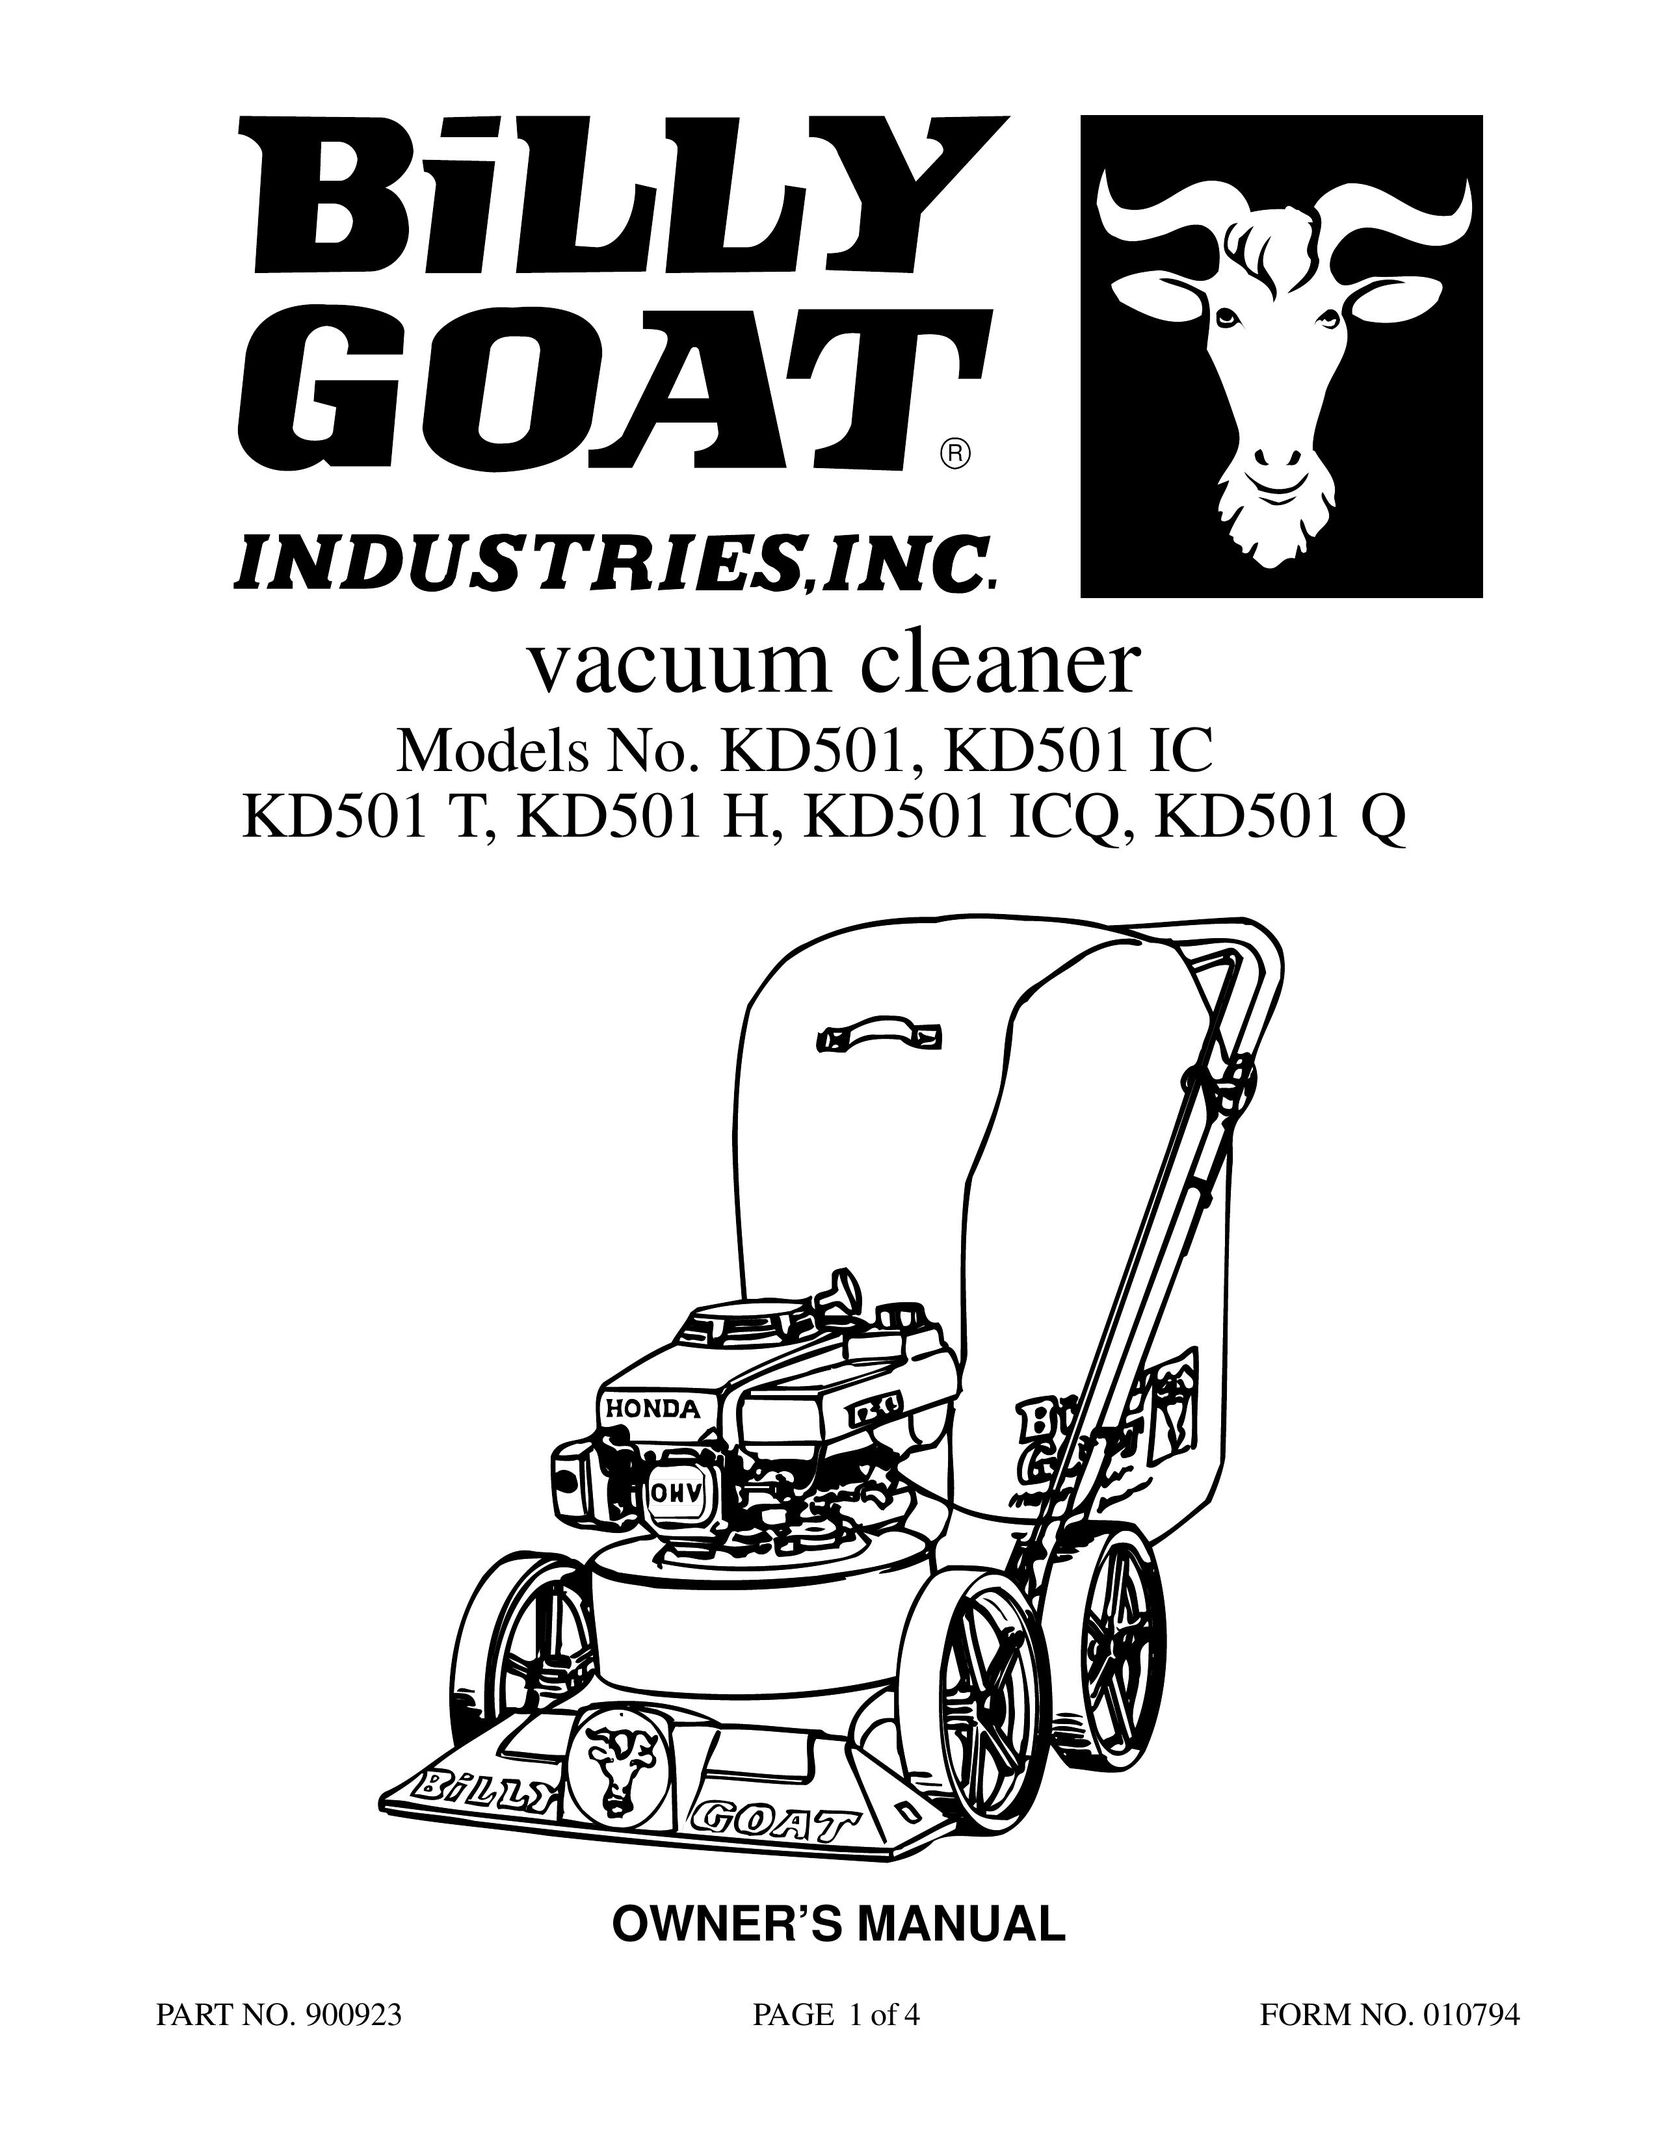 Billy Goat KD501 Vacuum Cleaner User Manual